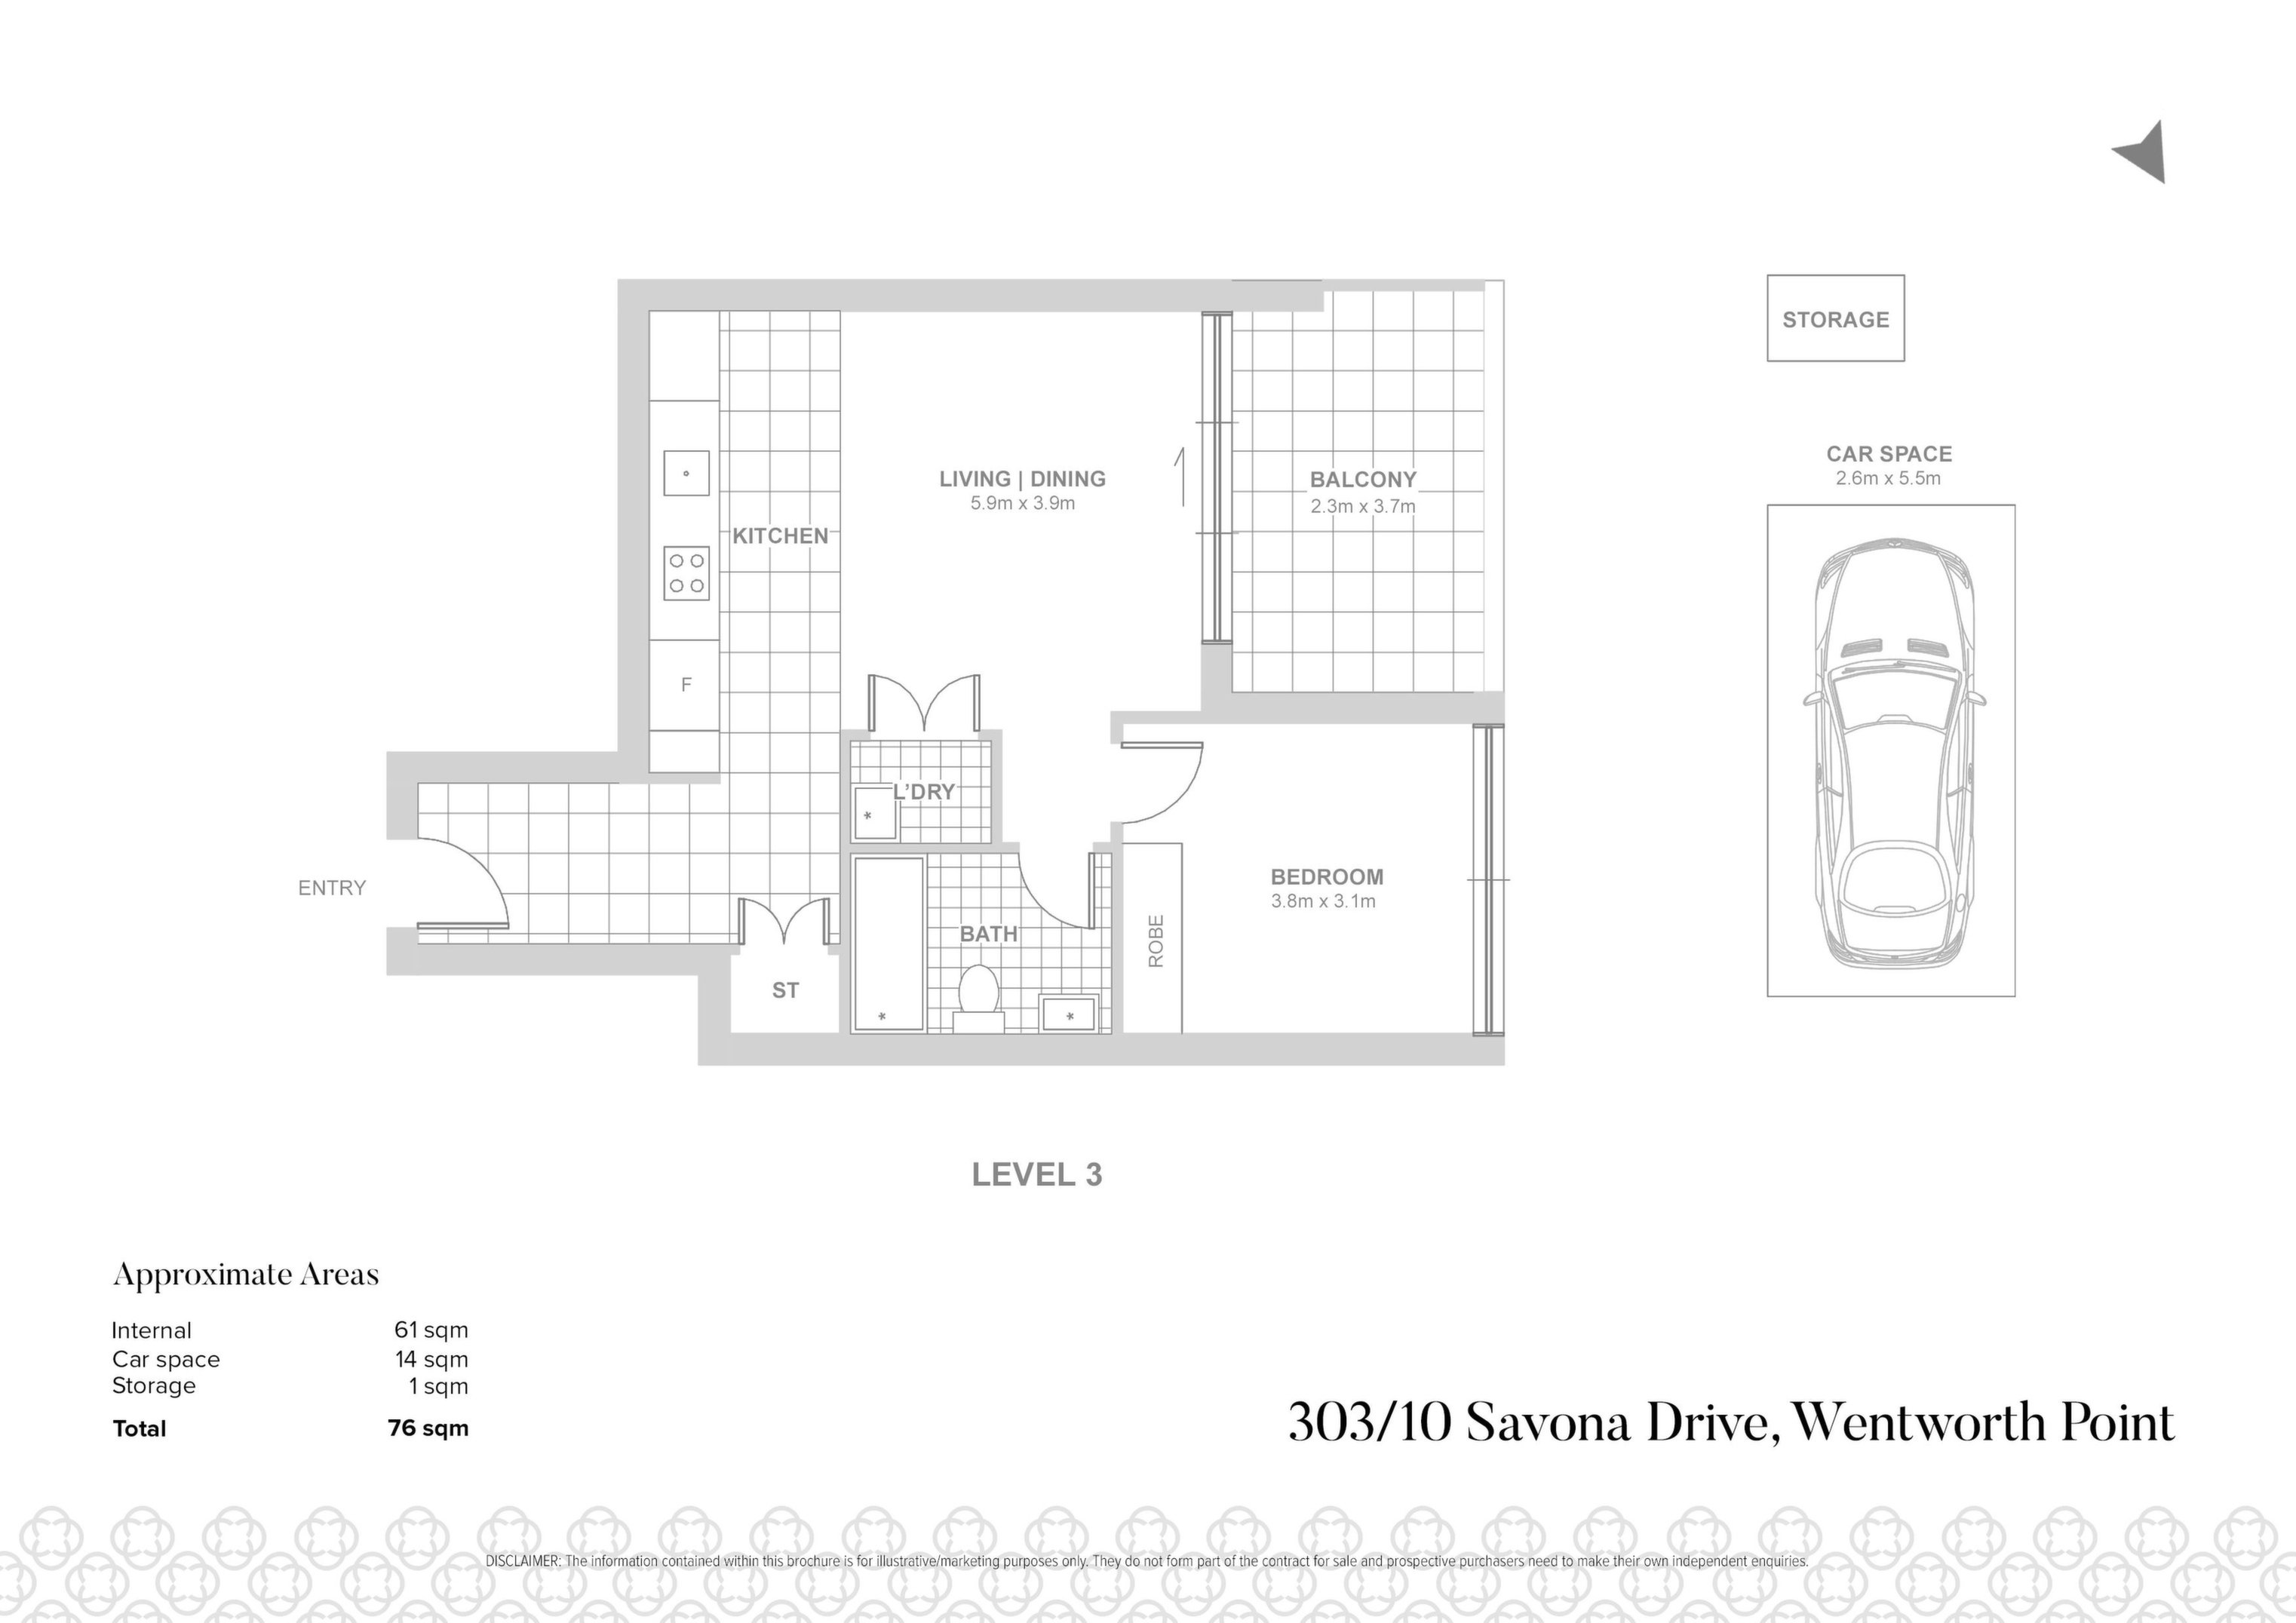 303/10 Savona Drive, Wentworth Point Sold by Chidiac Realty - floorplan